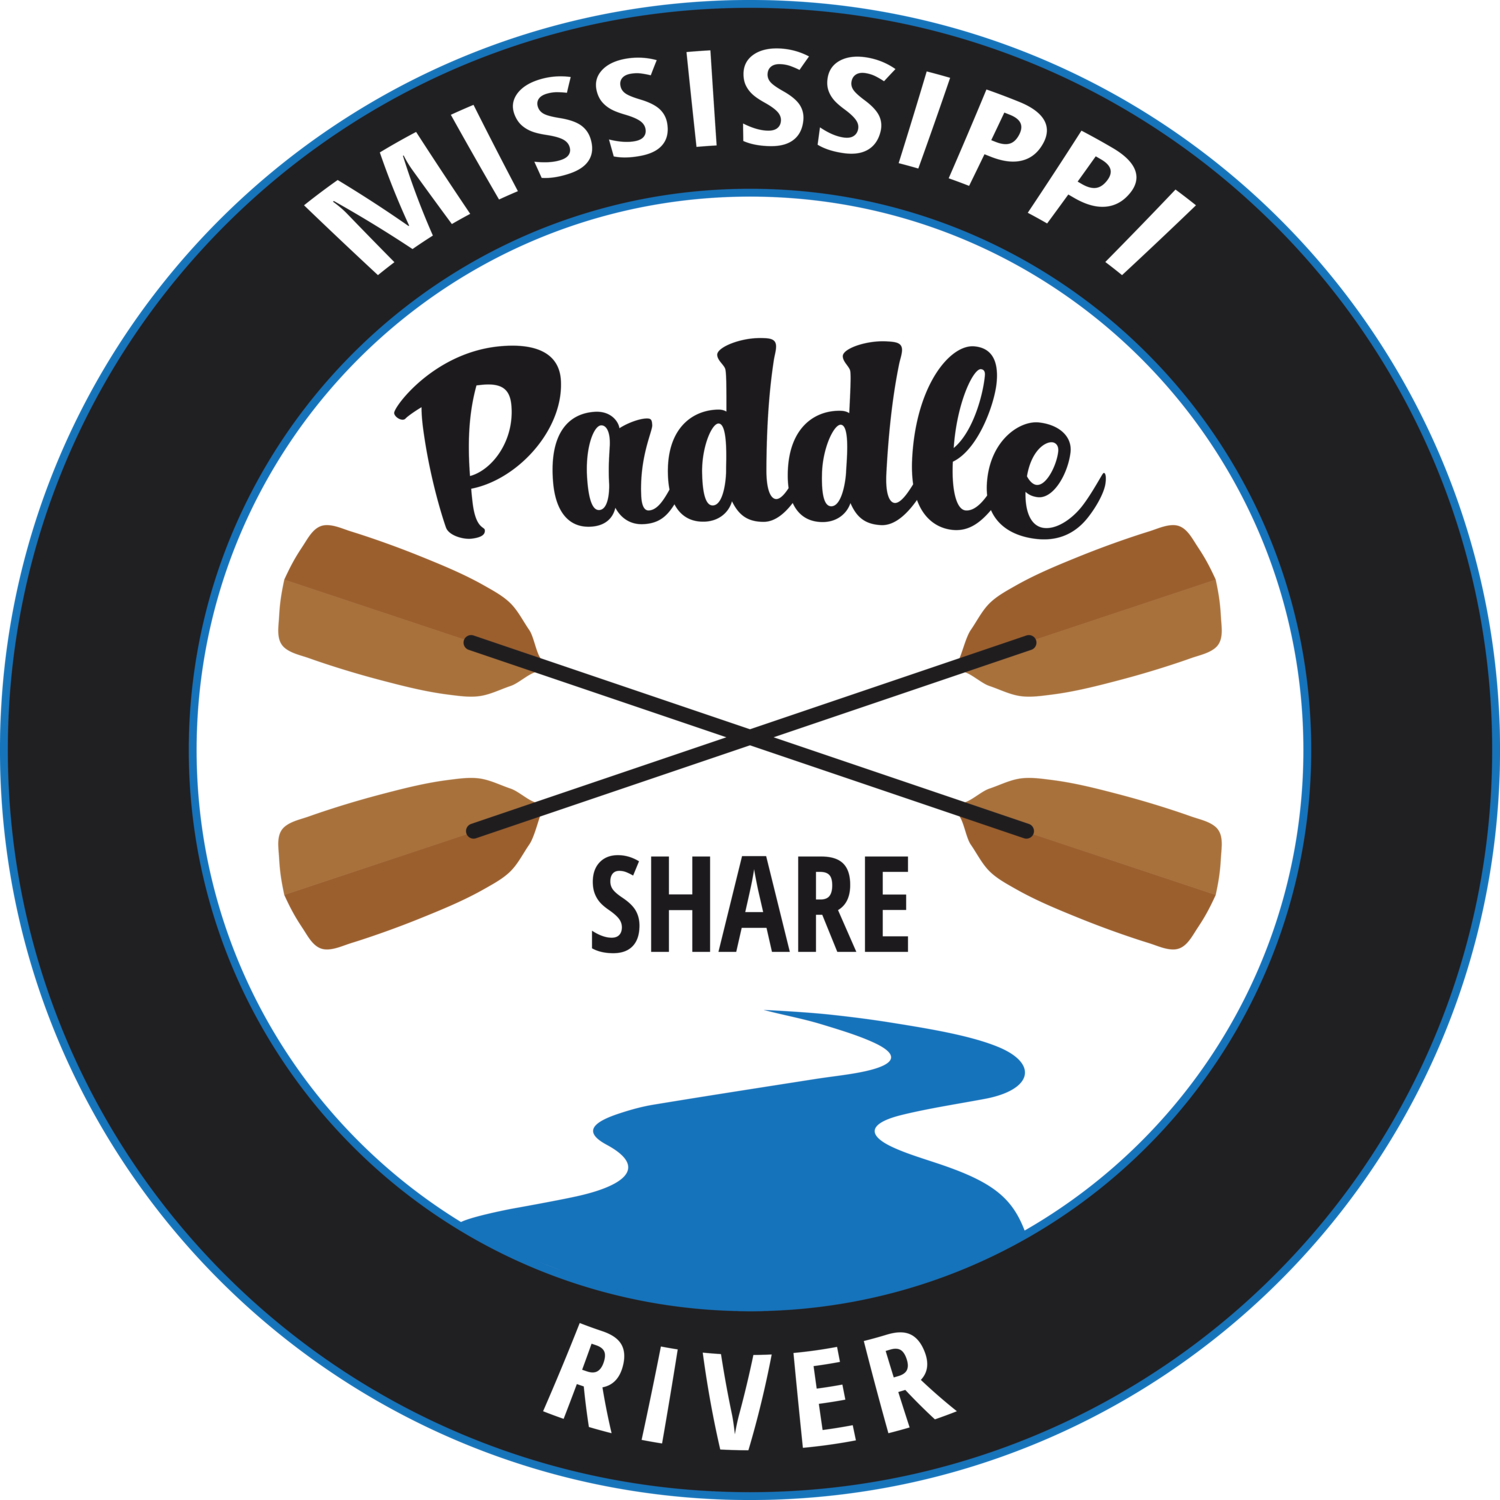 Mississippi River Paddle Share